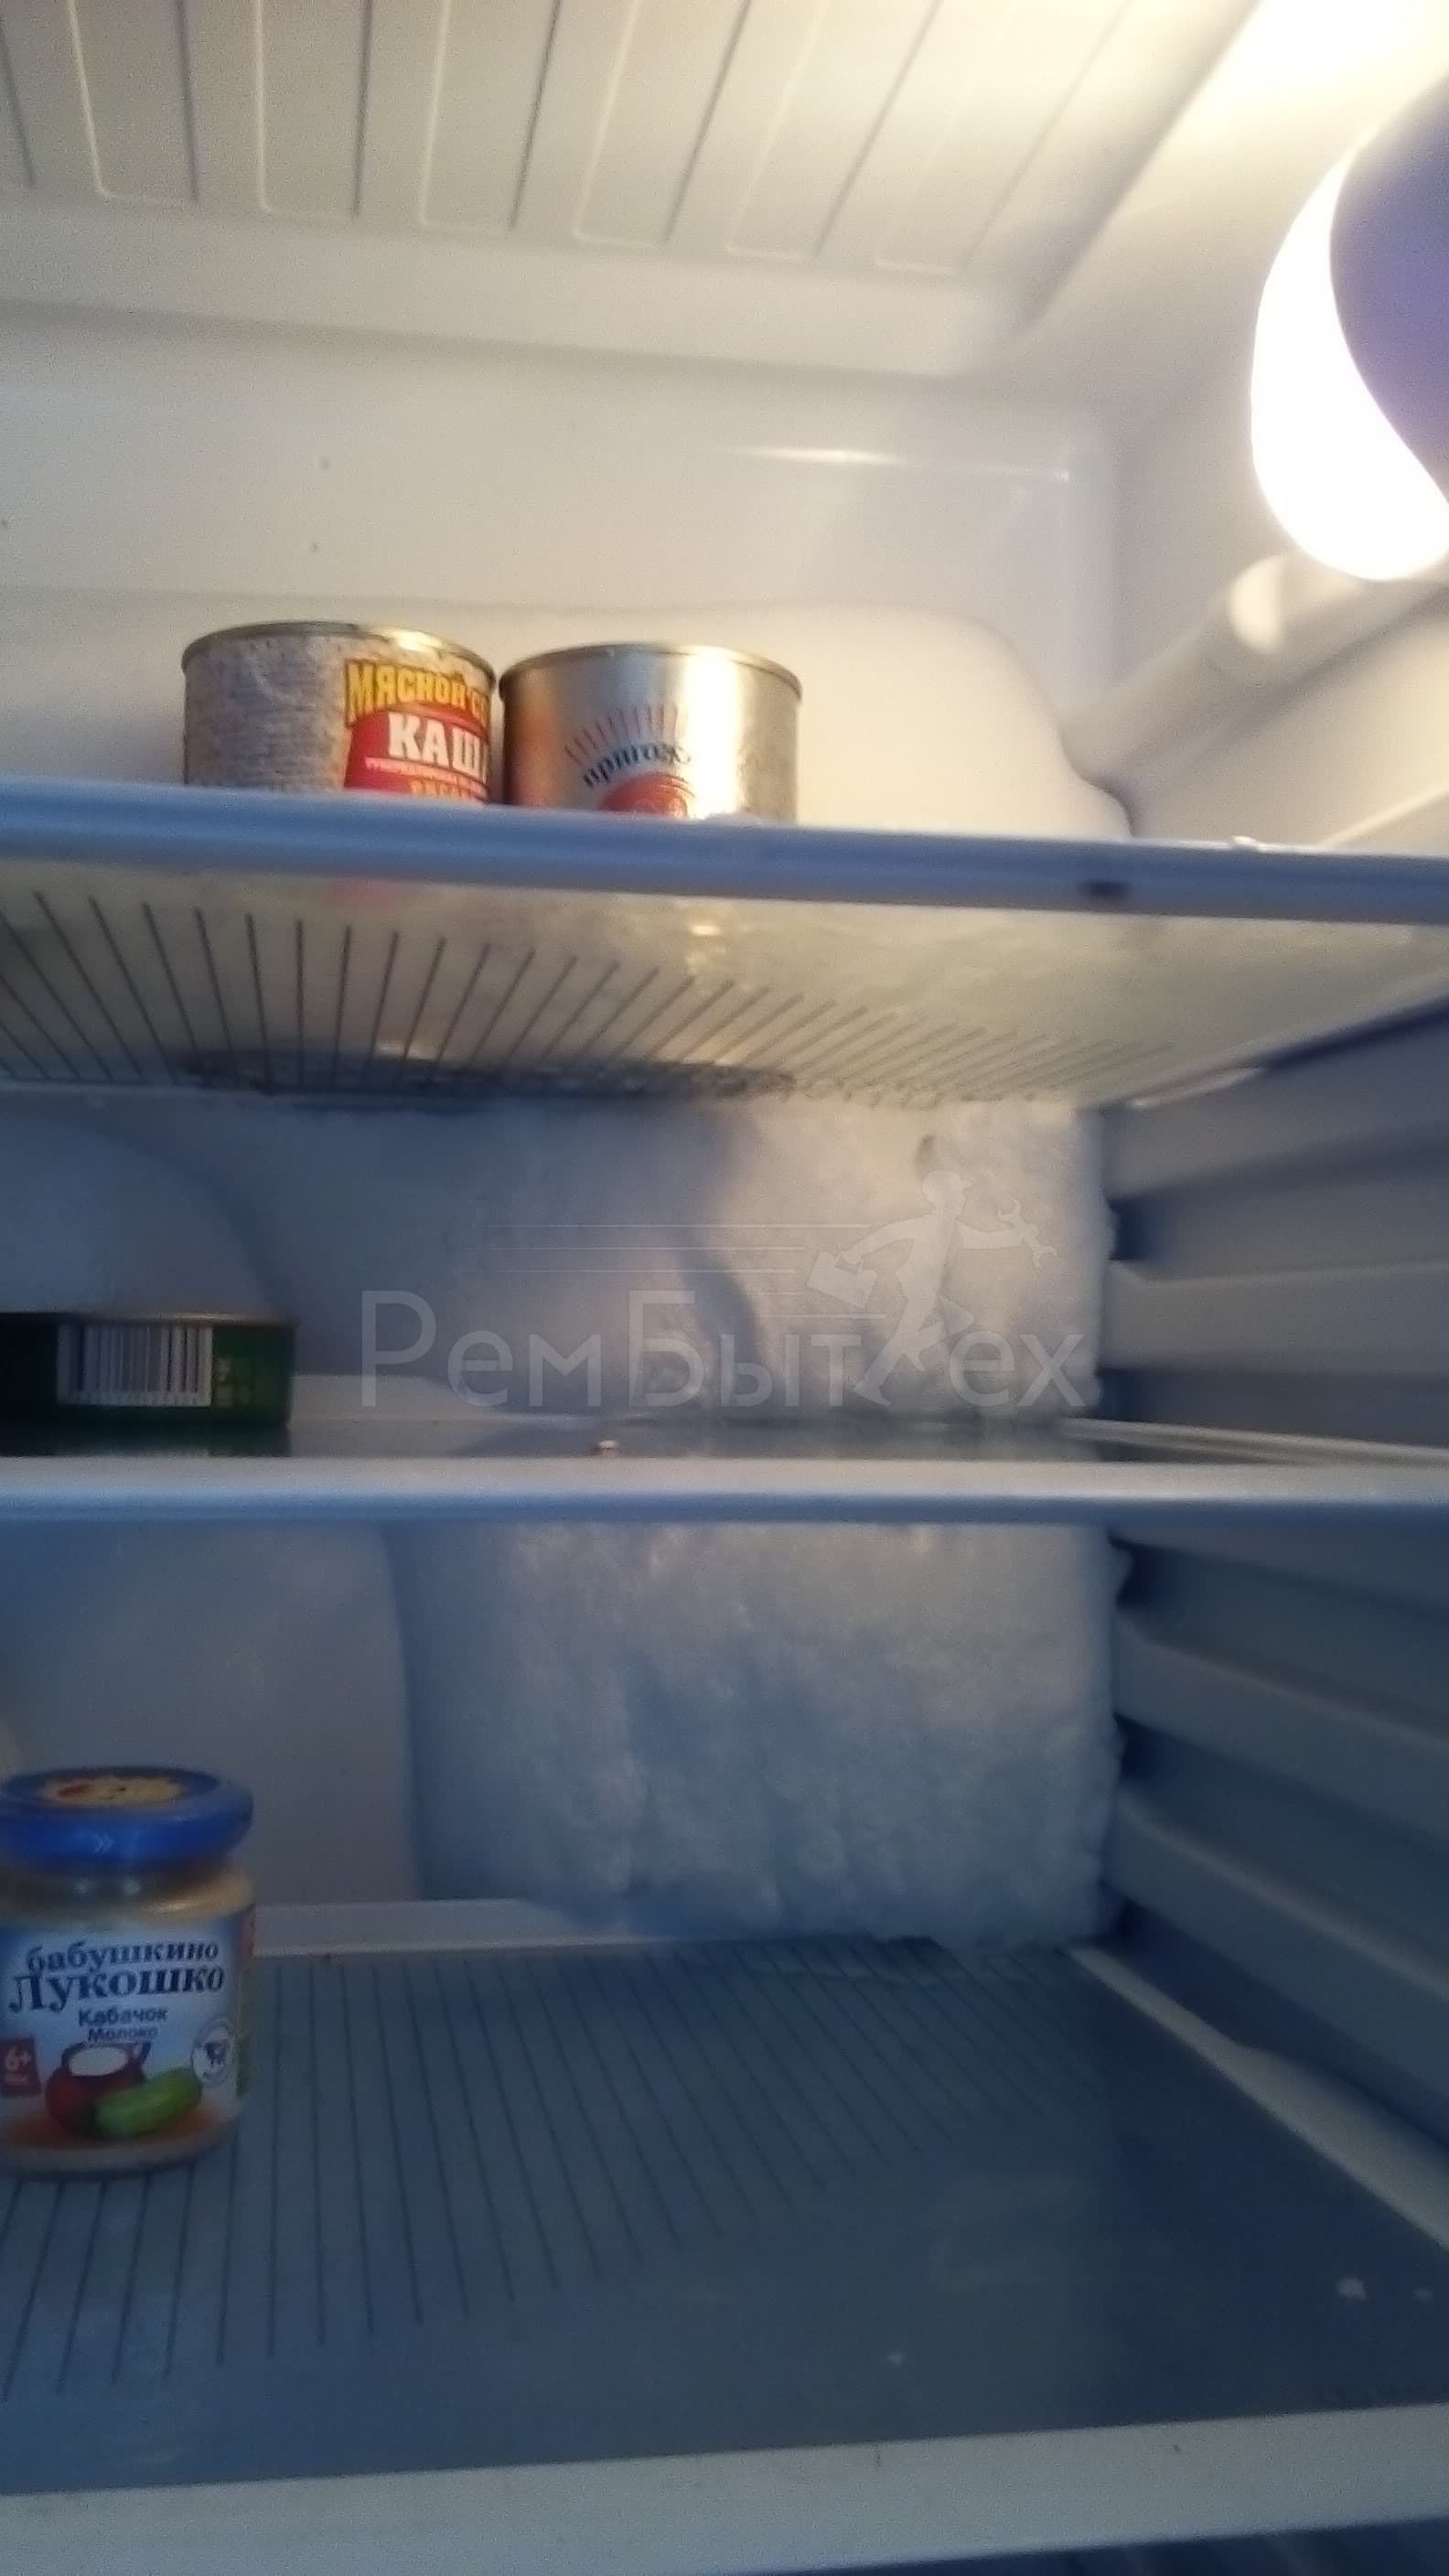 Намерзает лед на задней стенке холодильника